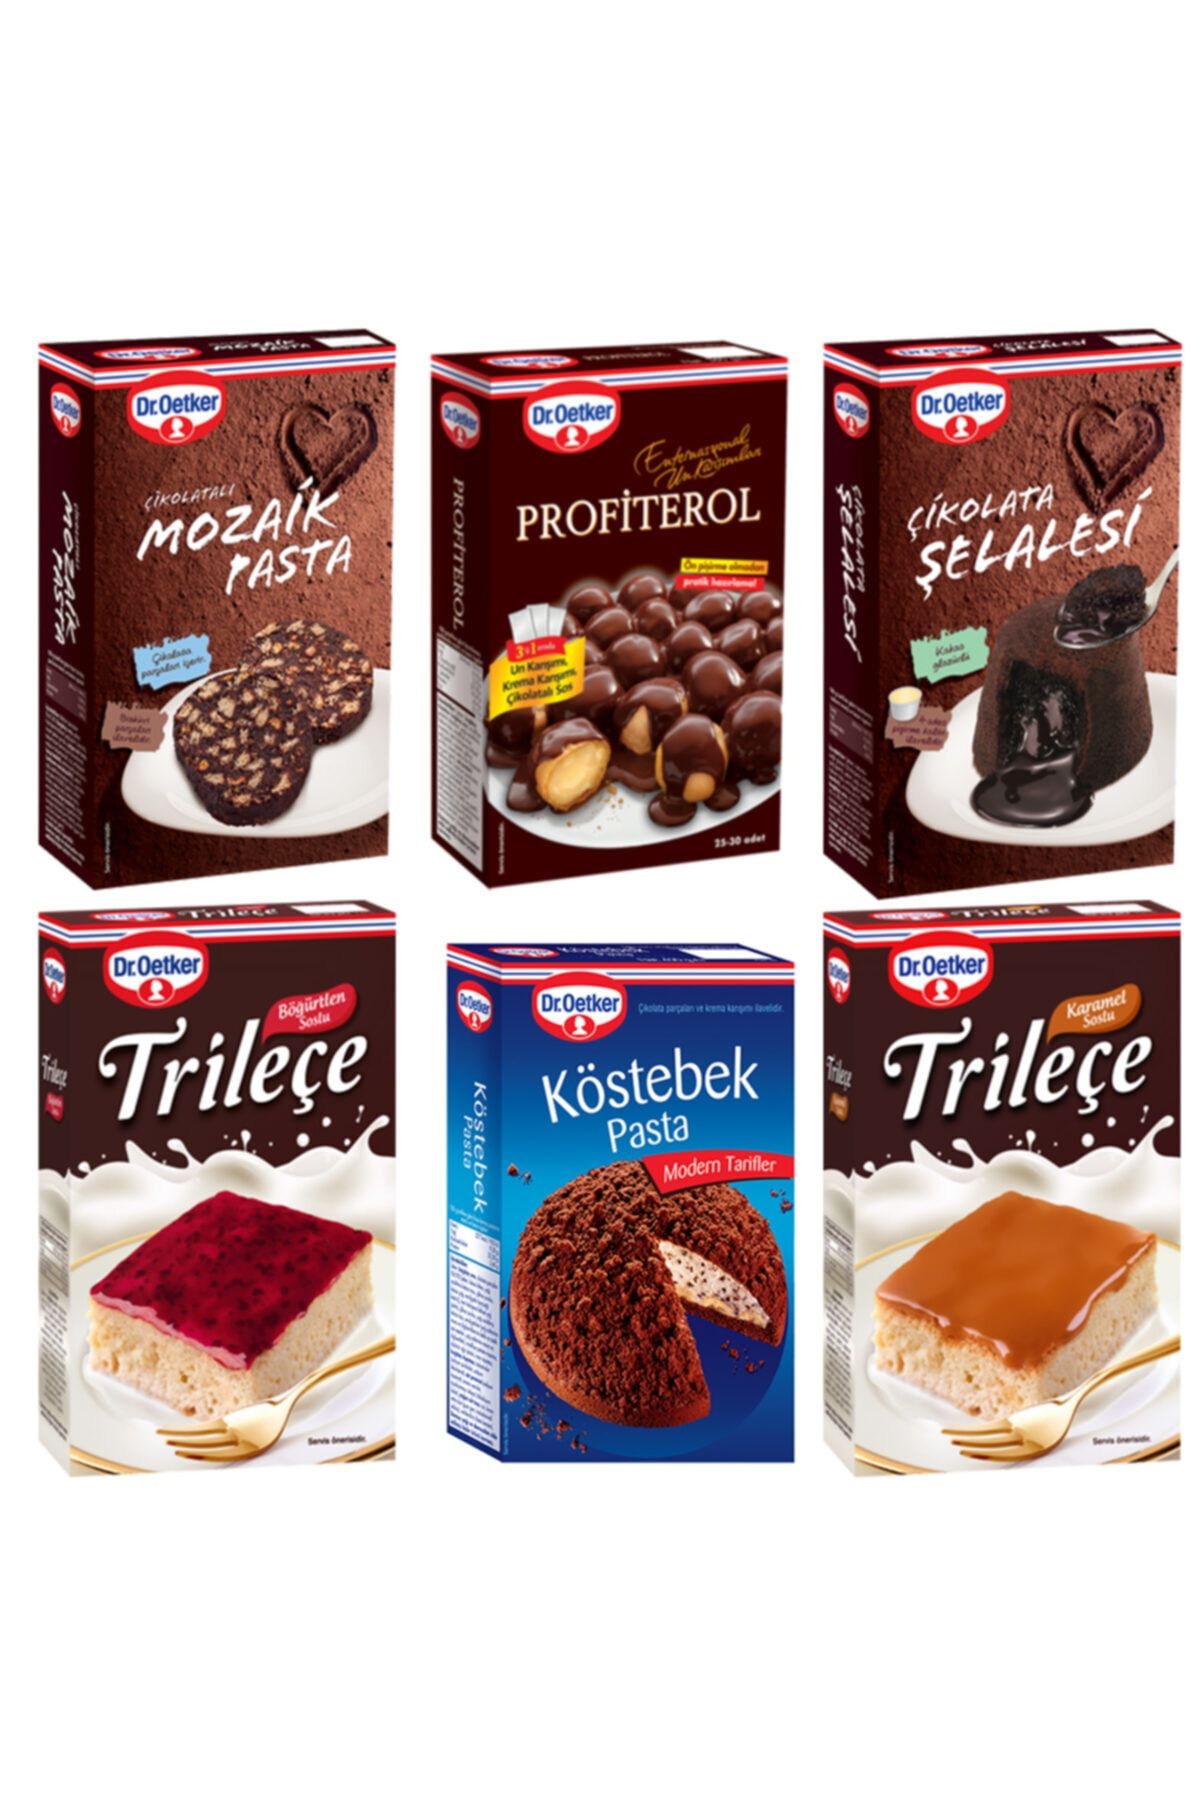 Dr. Oetker Mozaik Profiterol Çikolata Şelalesi Köstebek Pasta Böğürtlenli Ve Karamelli Trileçe Paket